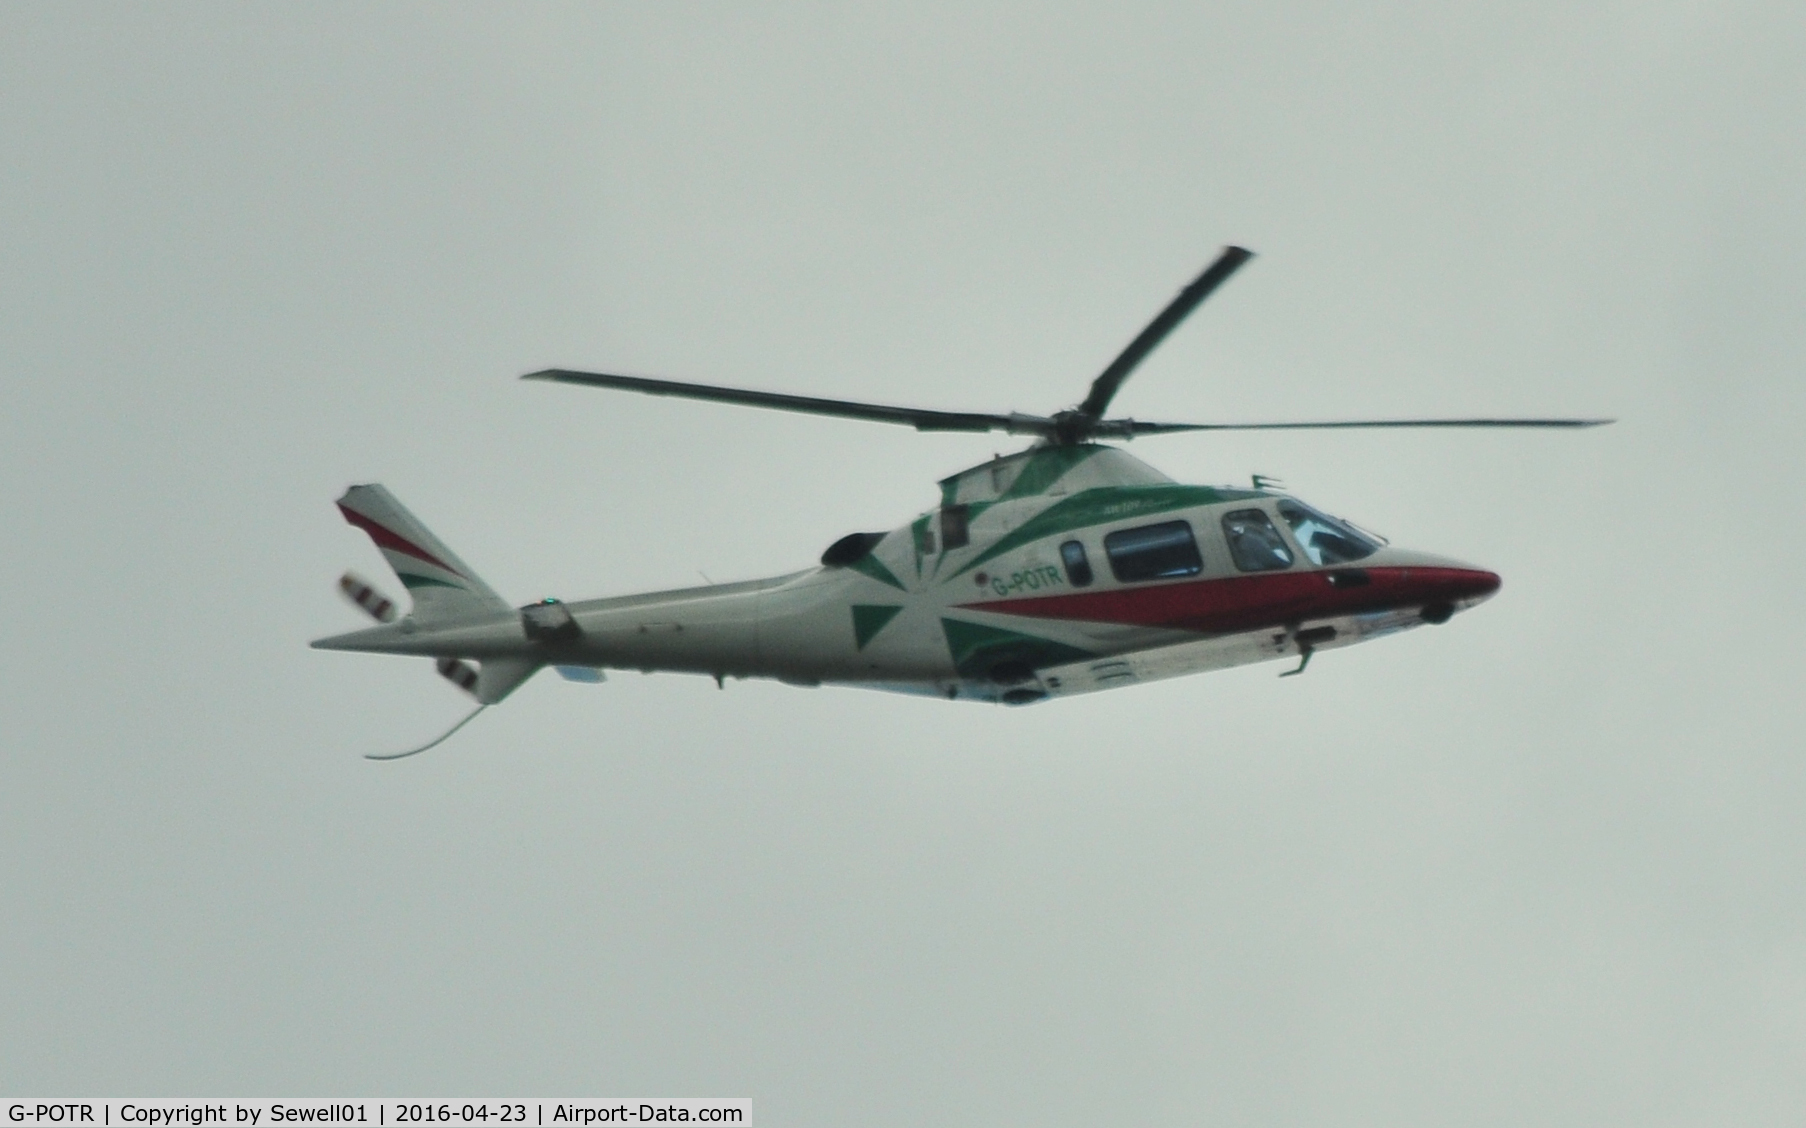 G-POTR, 1999 Agusta A-109E Power C/N 11043, Overhead Walton-on-Thames